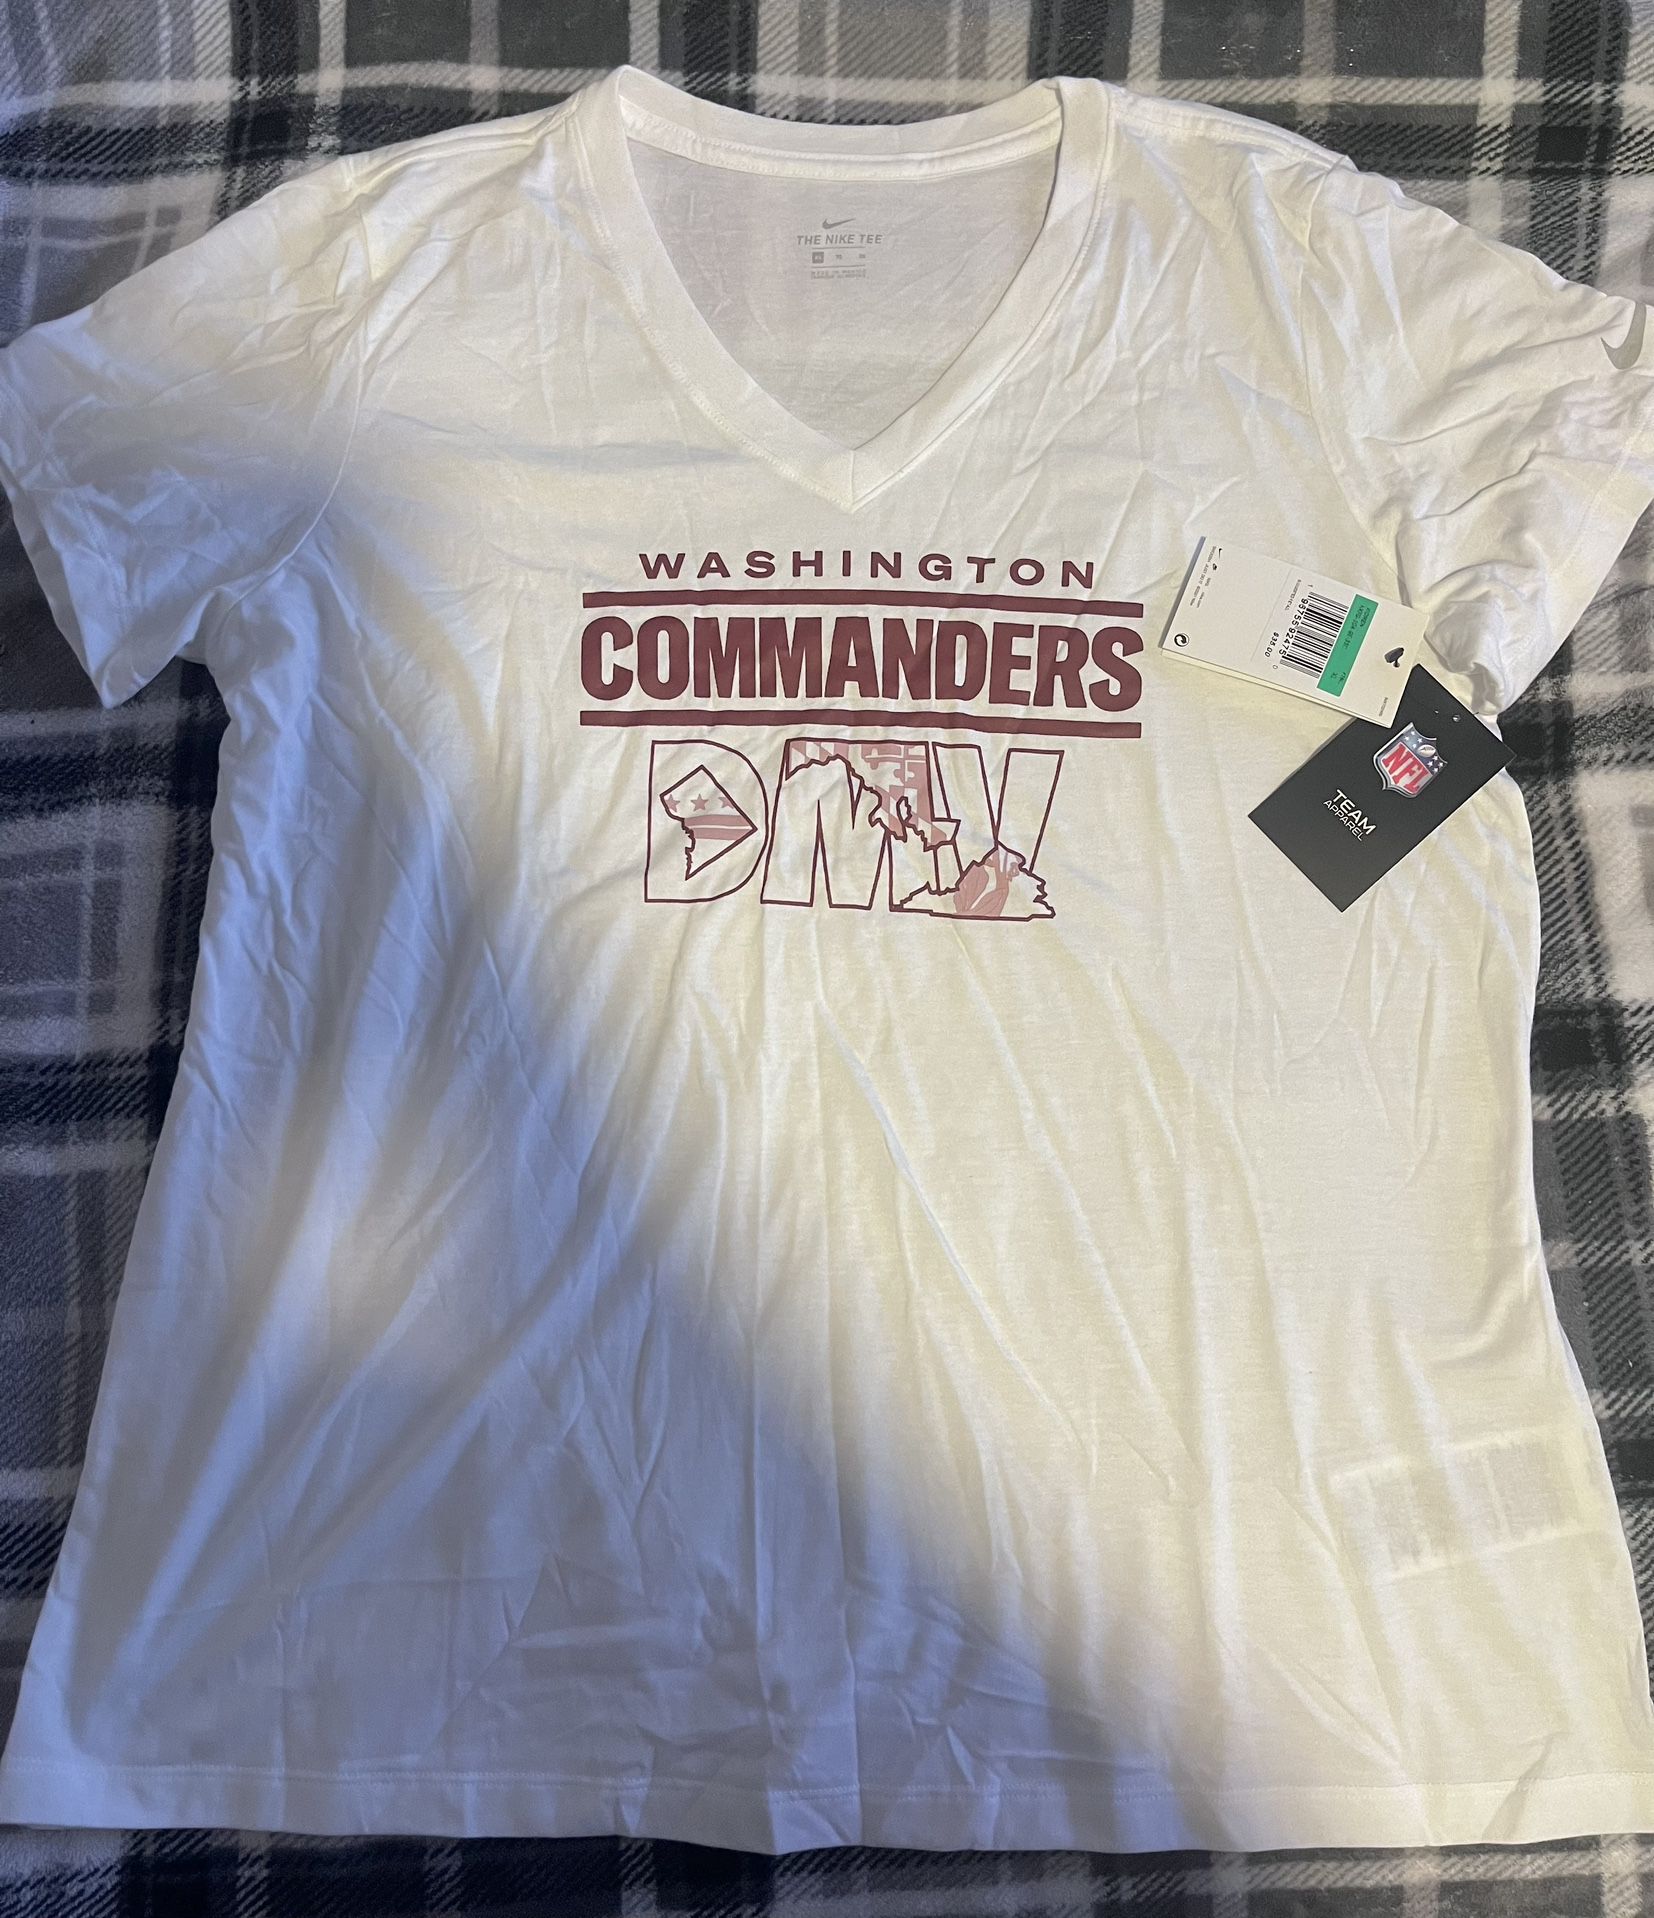 Washington Commanders Nike Dri Fit T Shirt. Women's XLarge. New Never Worn NWT